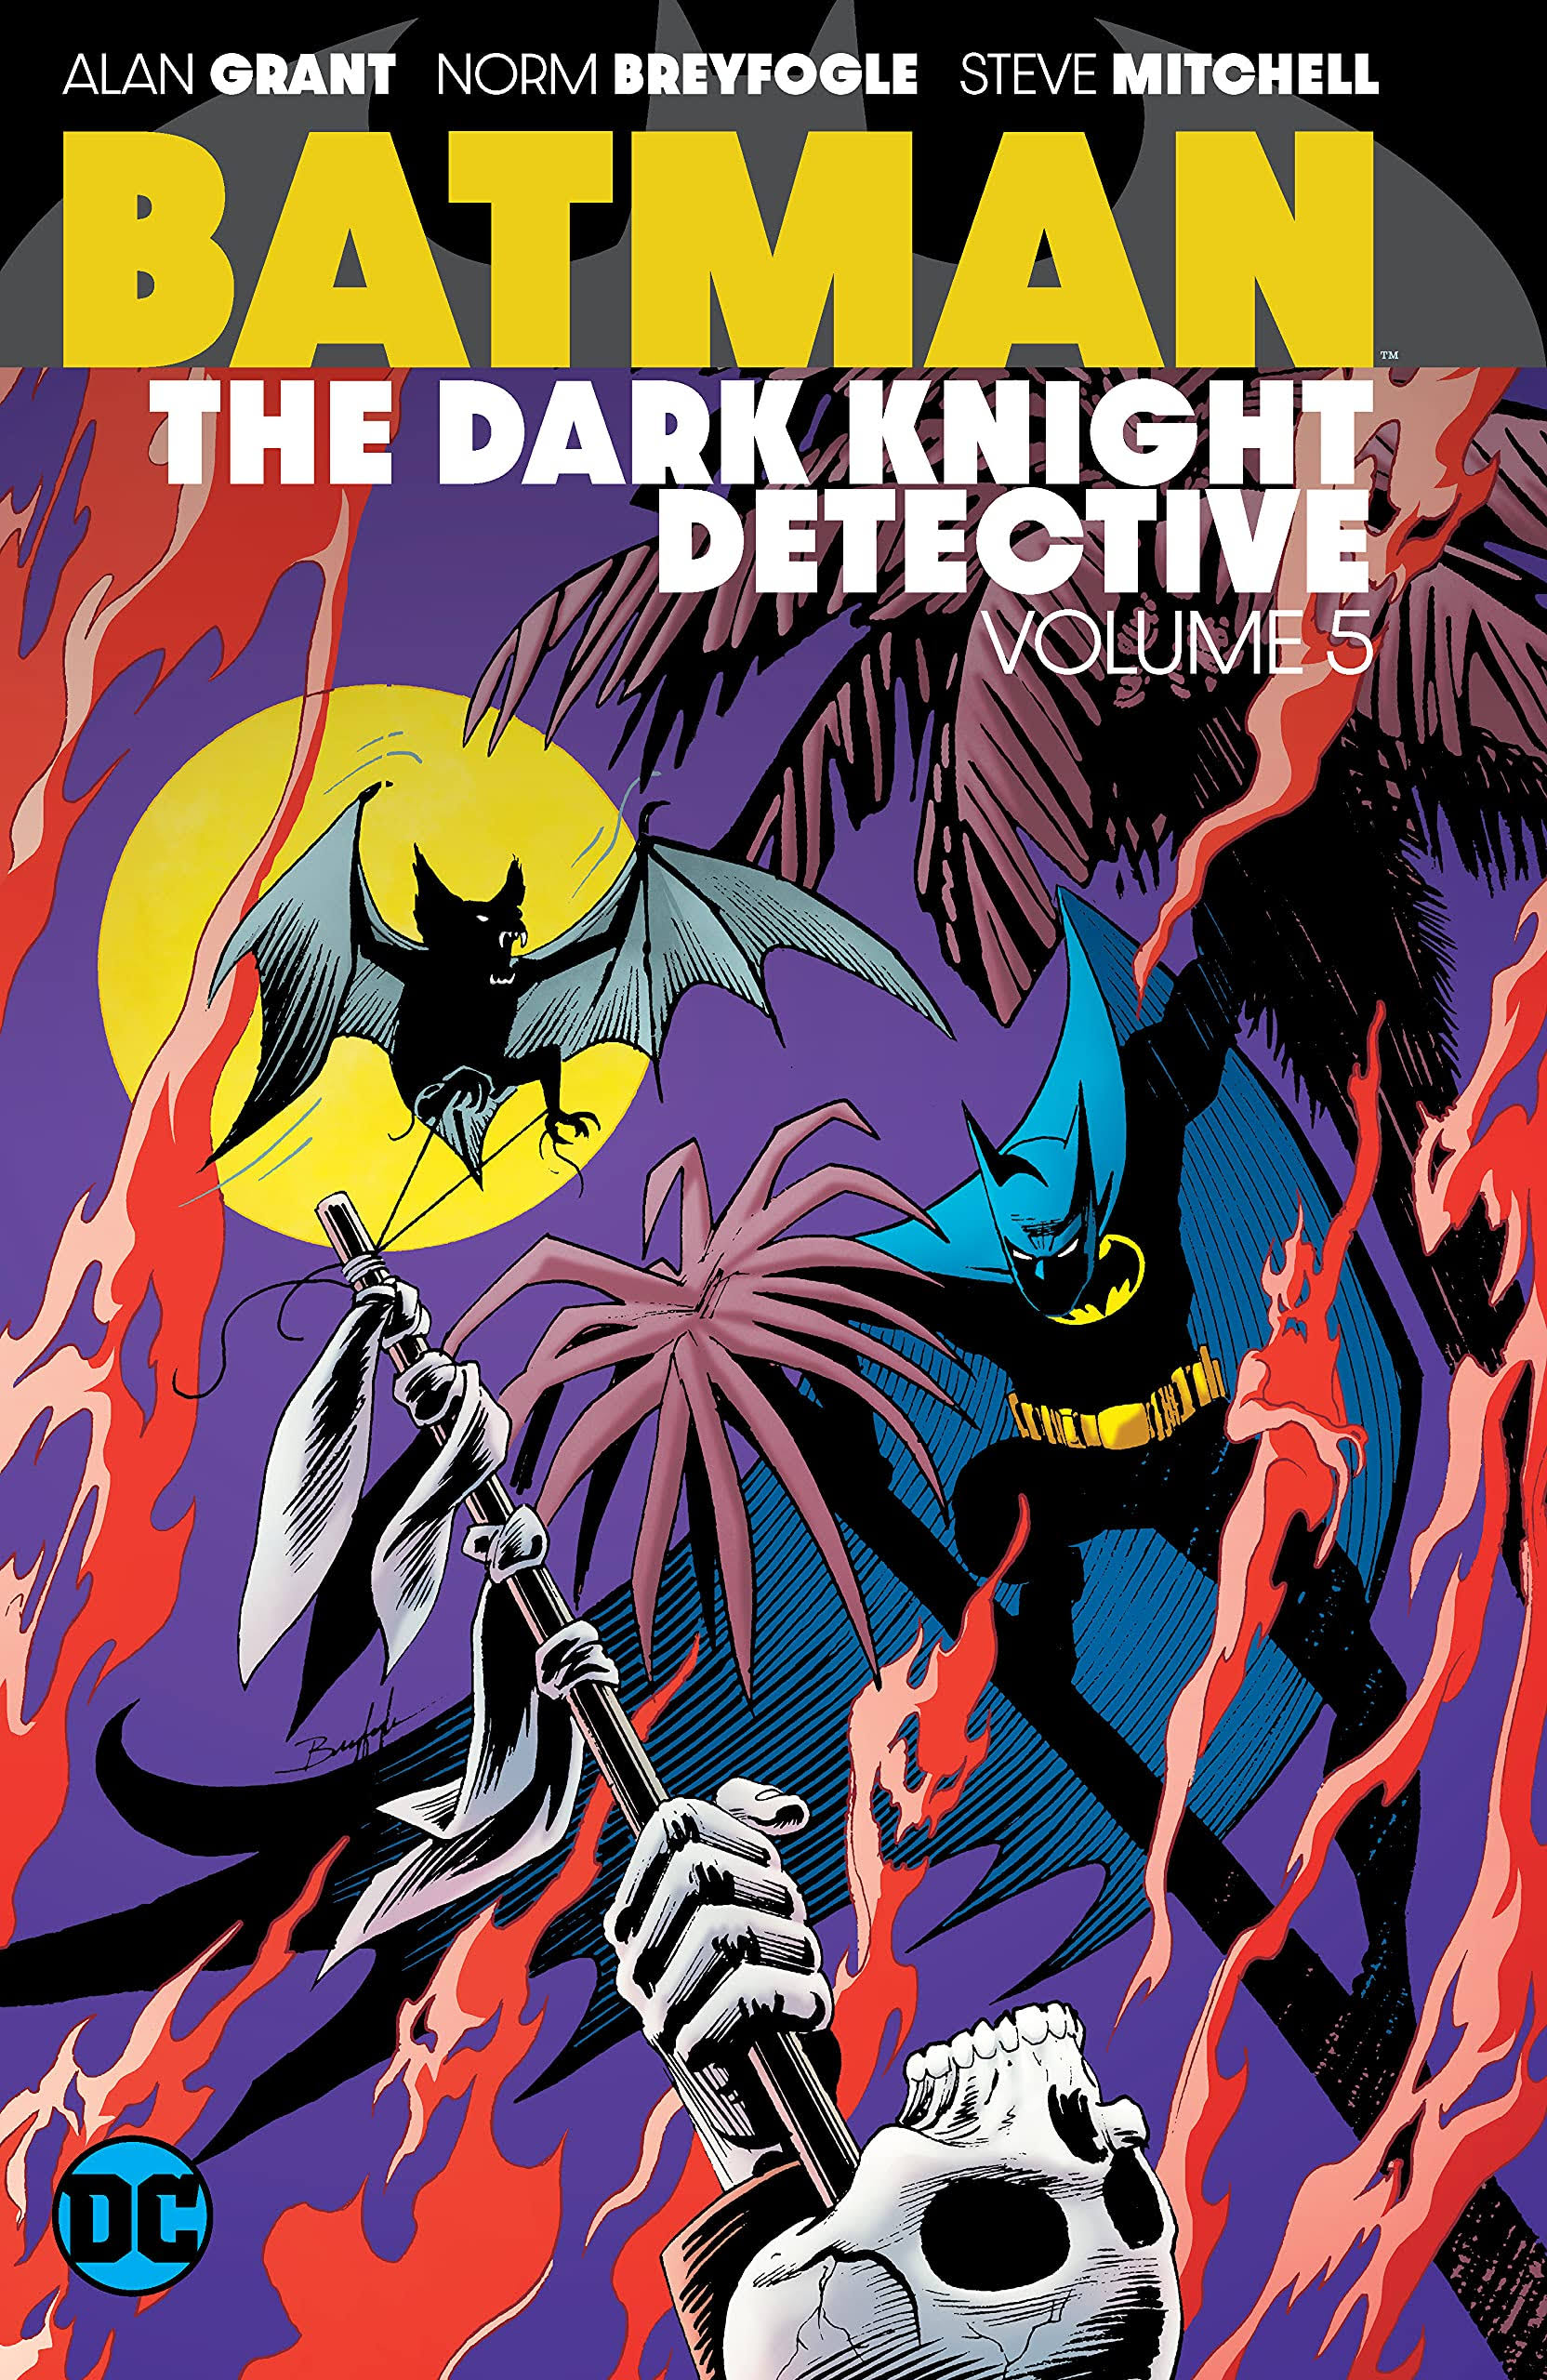 Batman: the Dark Knight Detective Vol. 5 [Book]